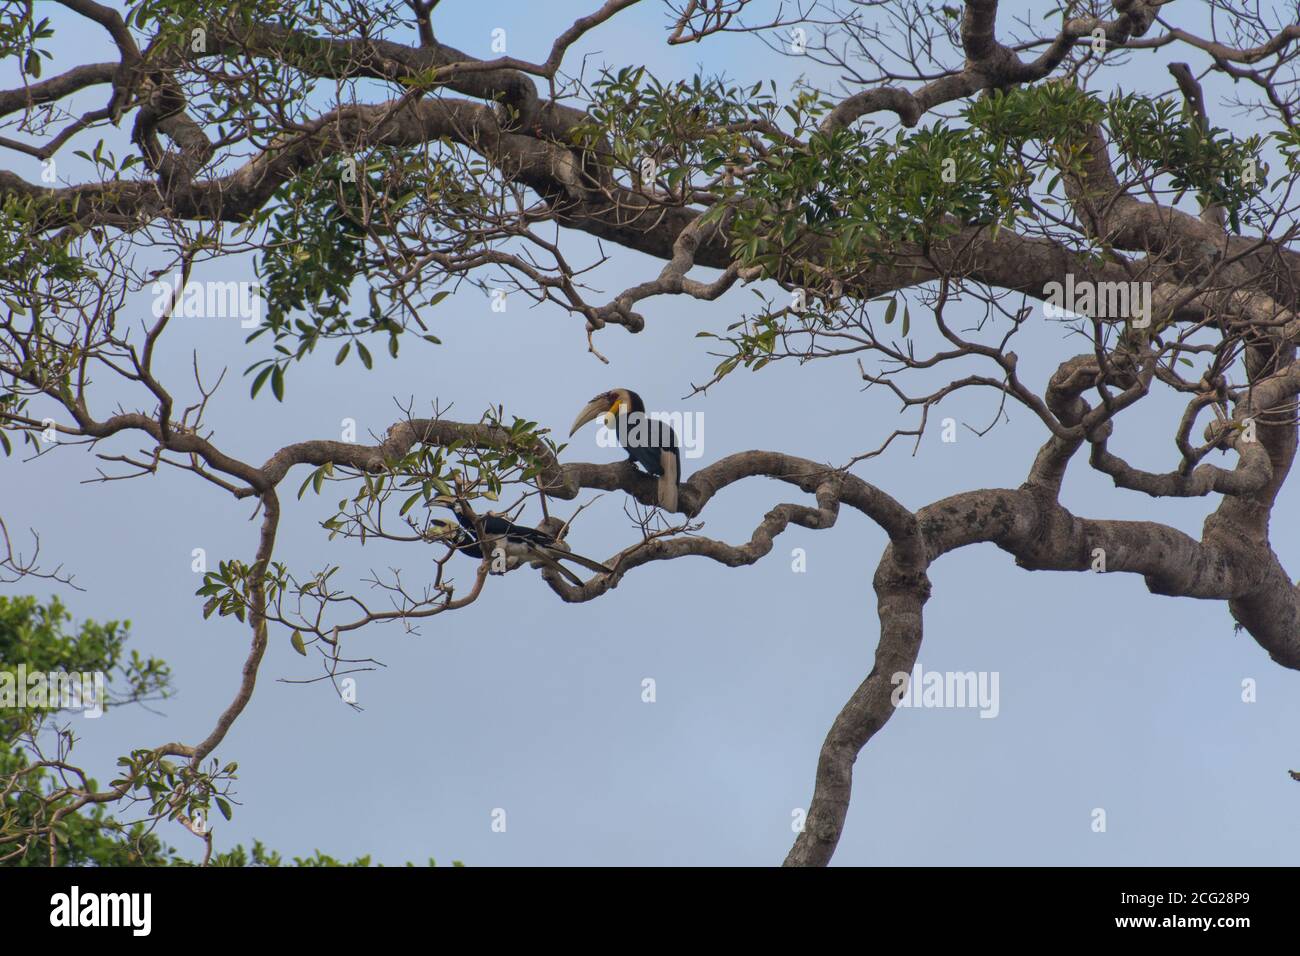 Rhyticeros undulatus, hornbill indonesia borneo Stock Photo